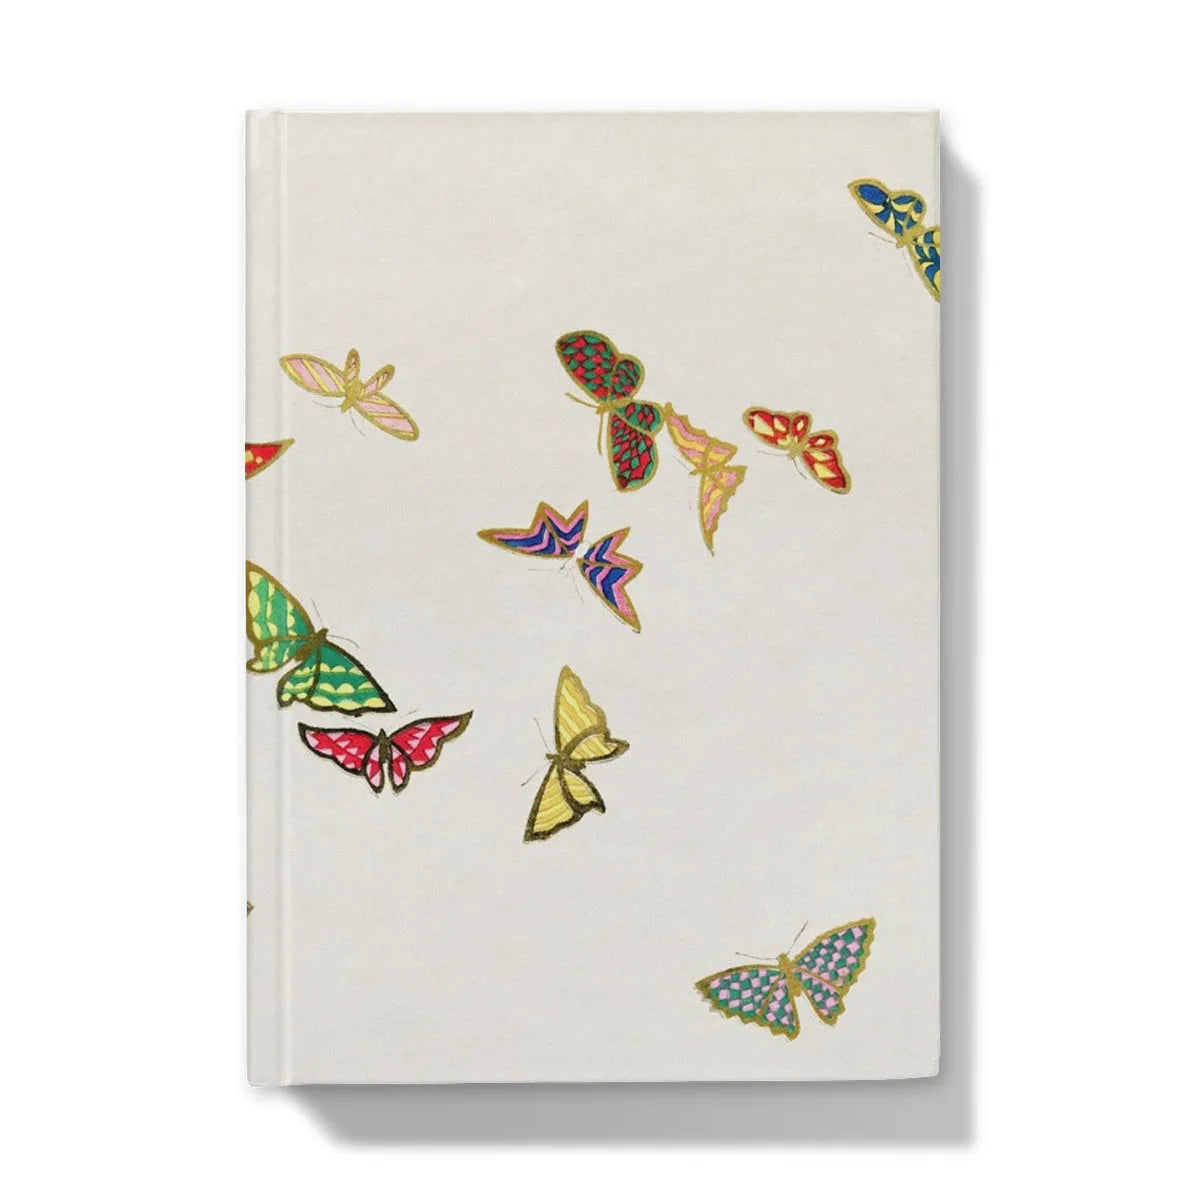 Japanese Rainbow Butterflies By Kamisaka Sekka Hardback Journal - 5’x7’ / Lined - Notebooks & Notepads - Aesthetic Art